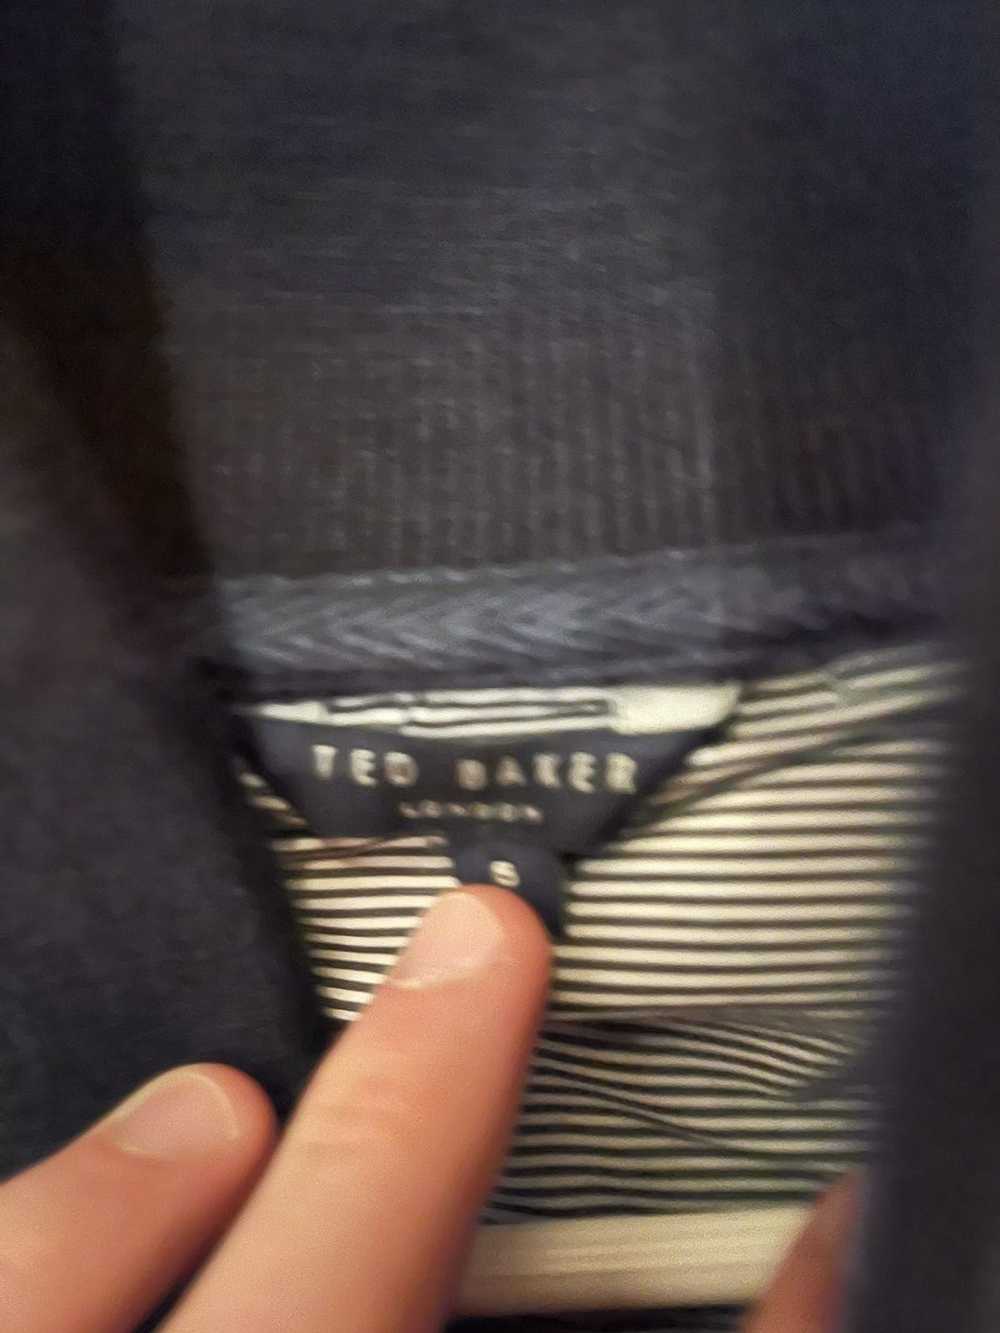 Ted Baker Ted baker sweater - image 2